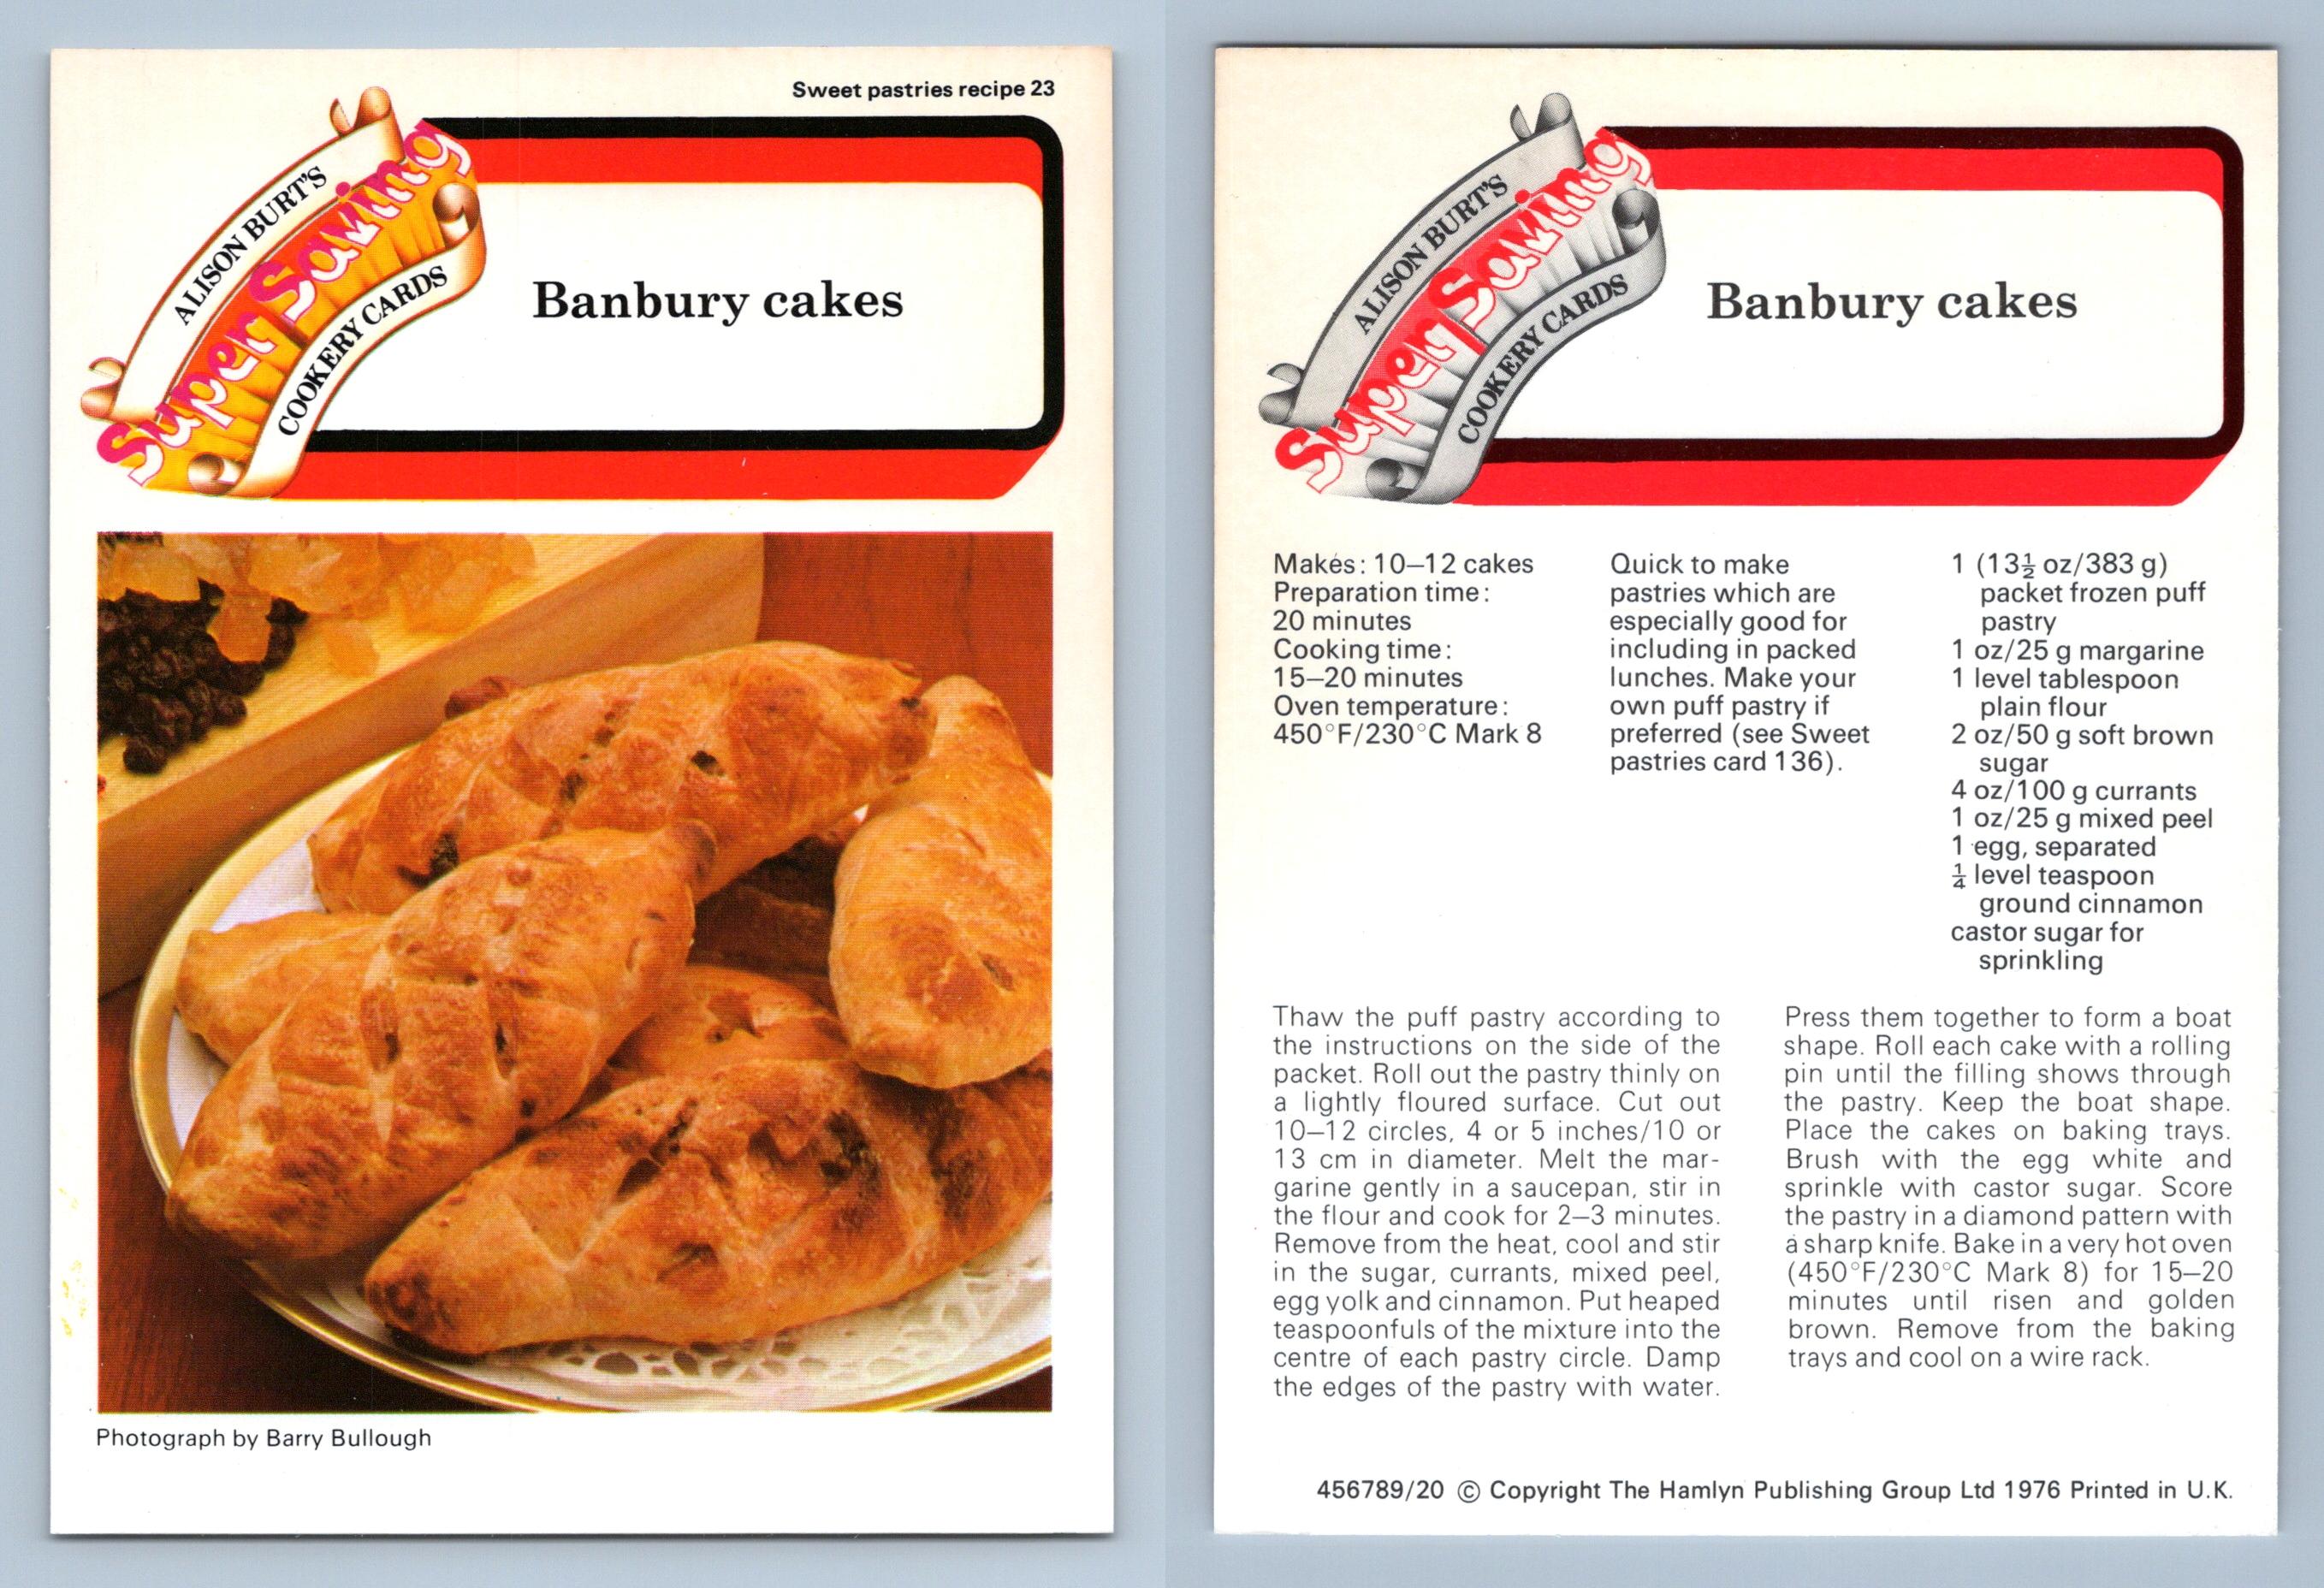 Banbury cake Stock Photos and Images | agefotostock